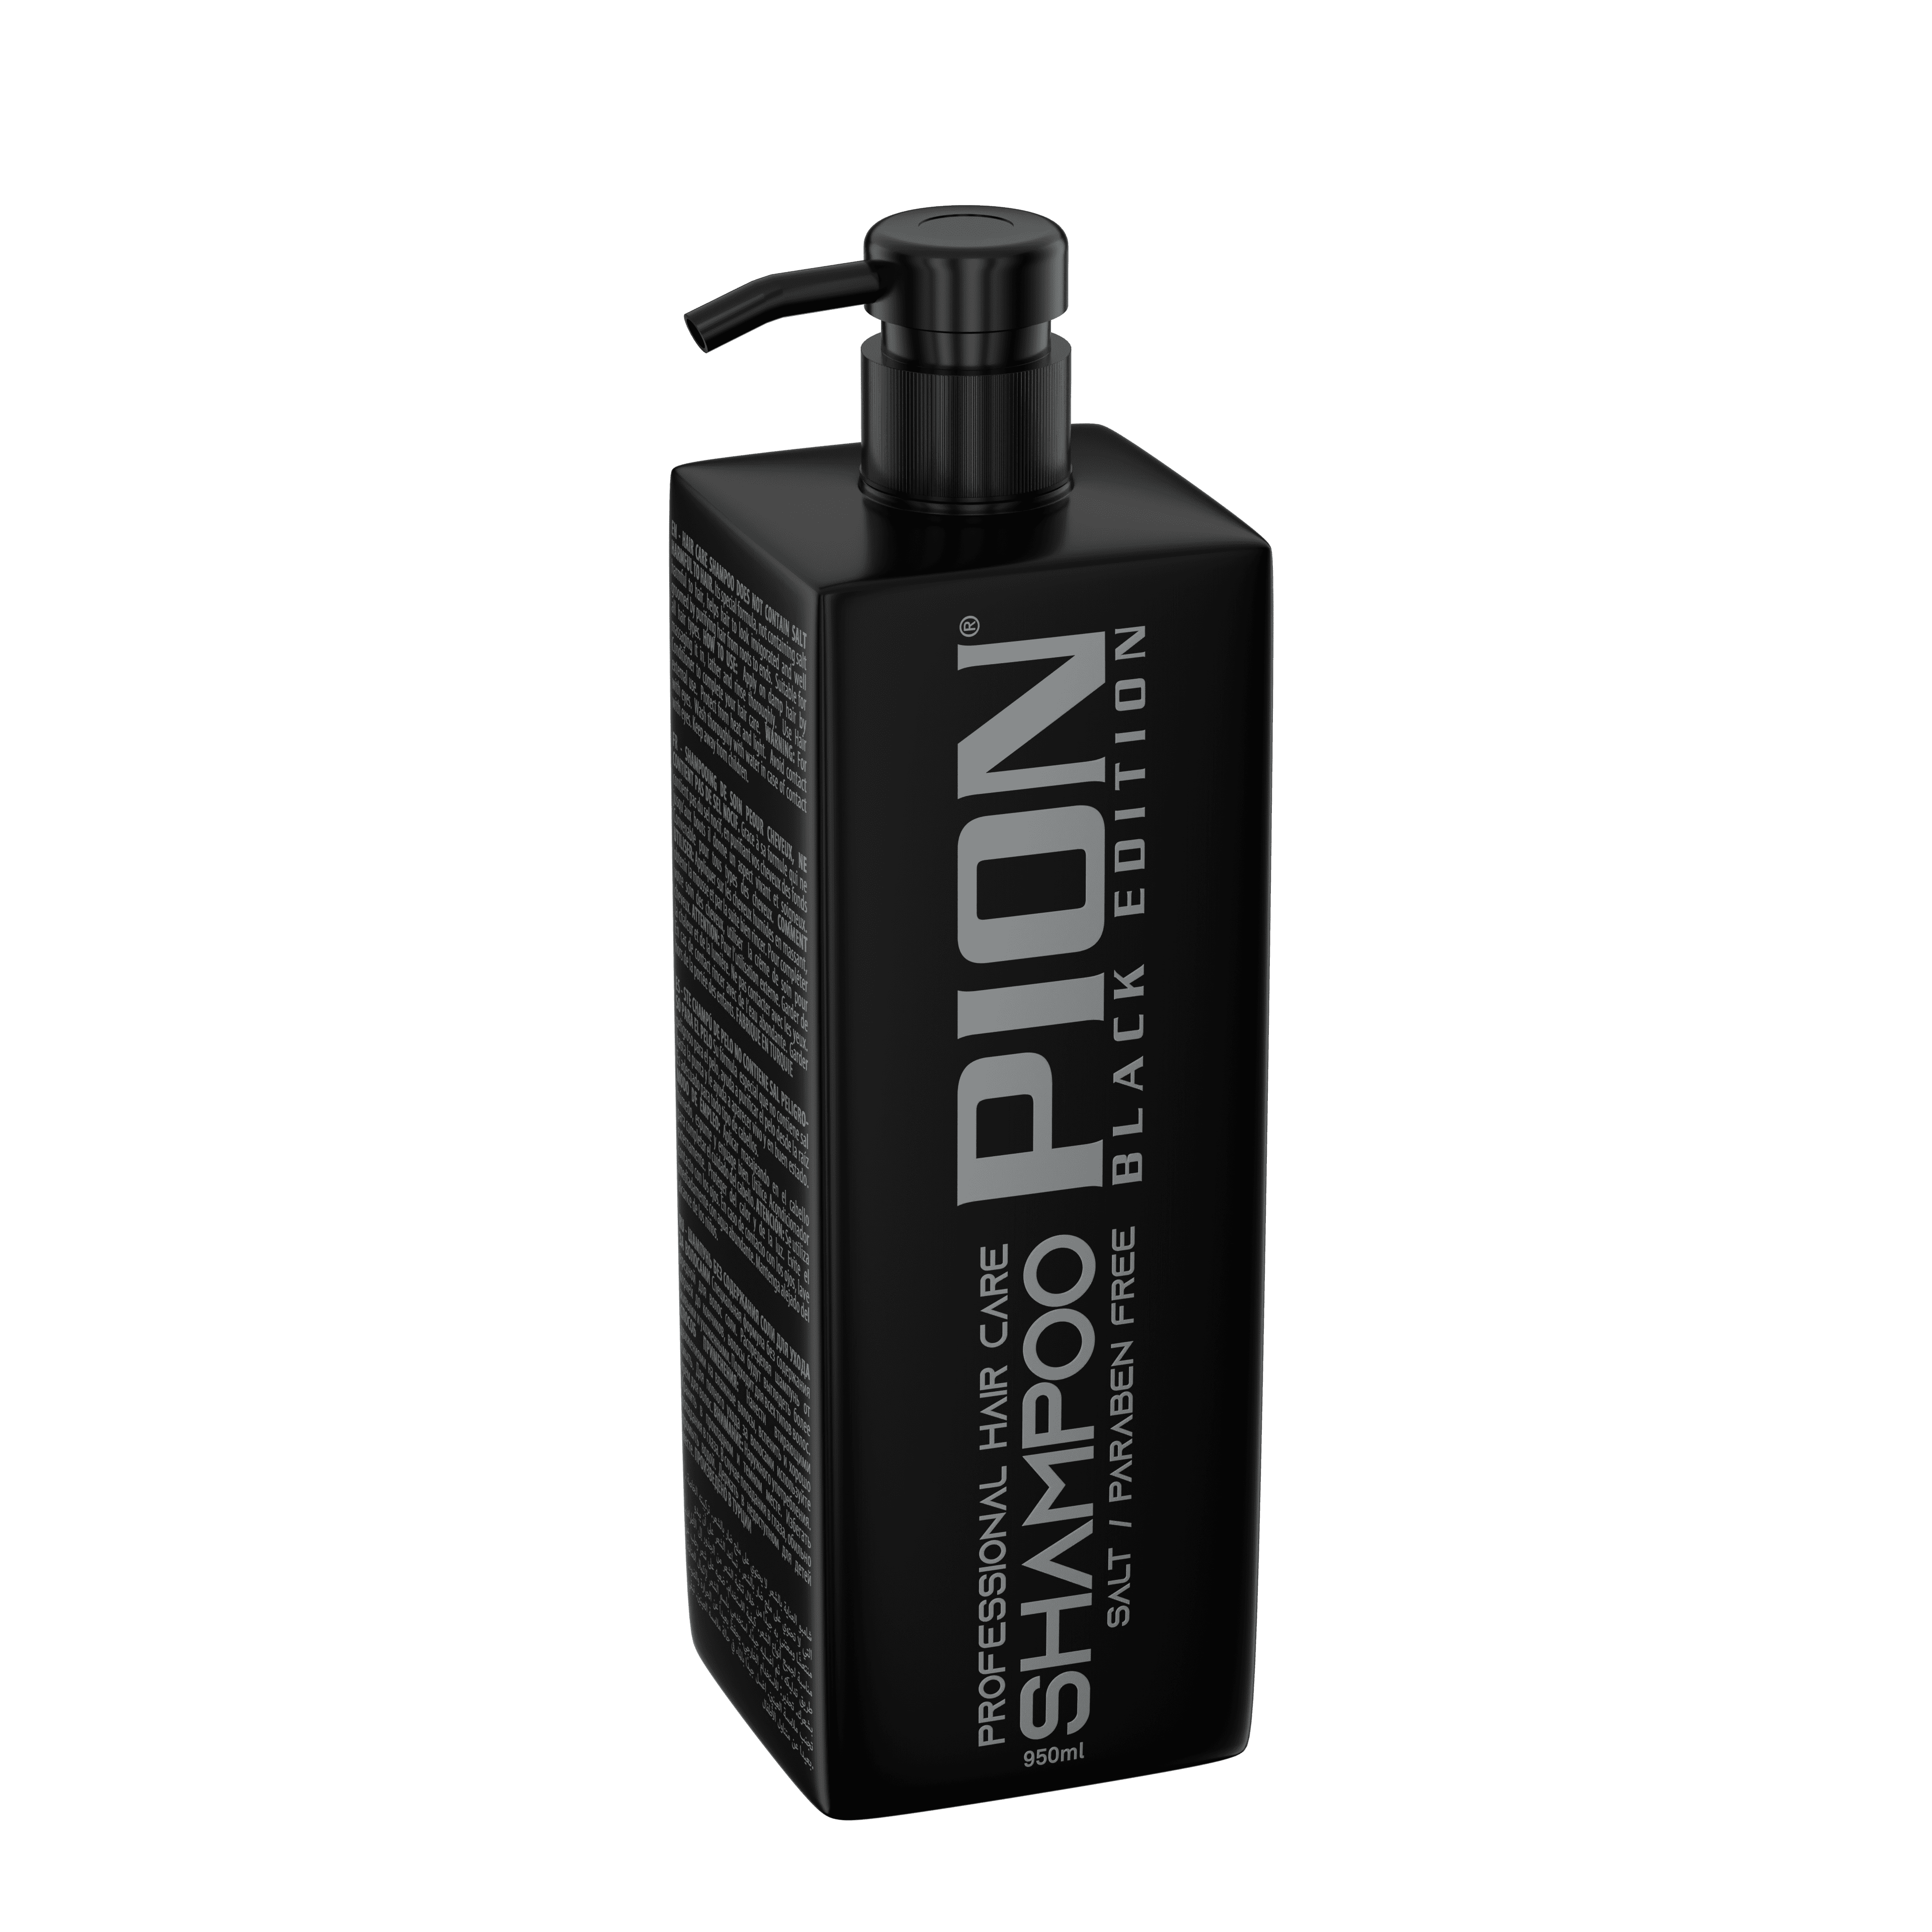 Pion Hair Care Shampoo White Keratin 950ml - PION BLACK EDITION